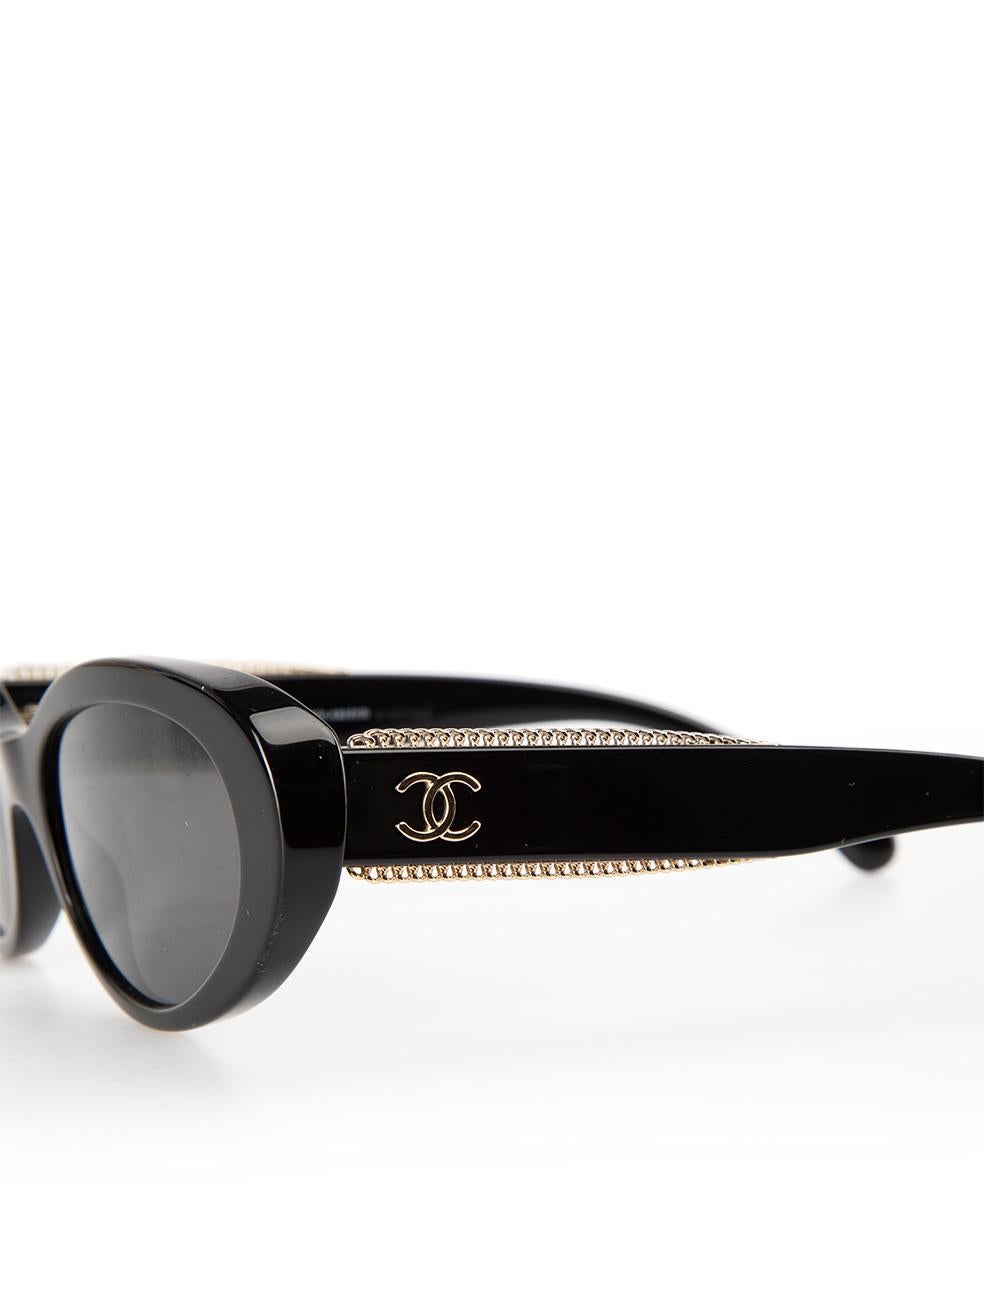 Chanel Black Oval Sunglasses For Sale 2